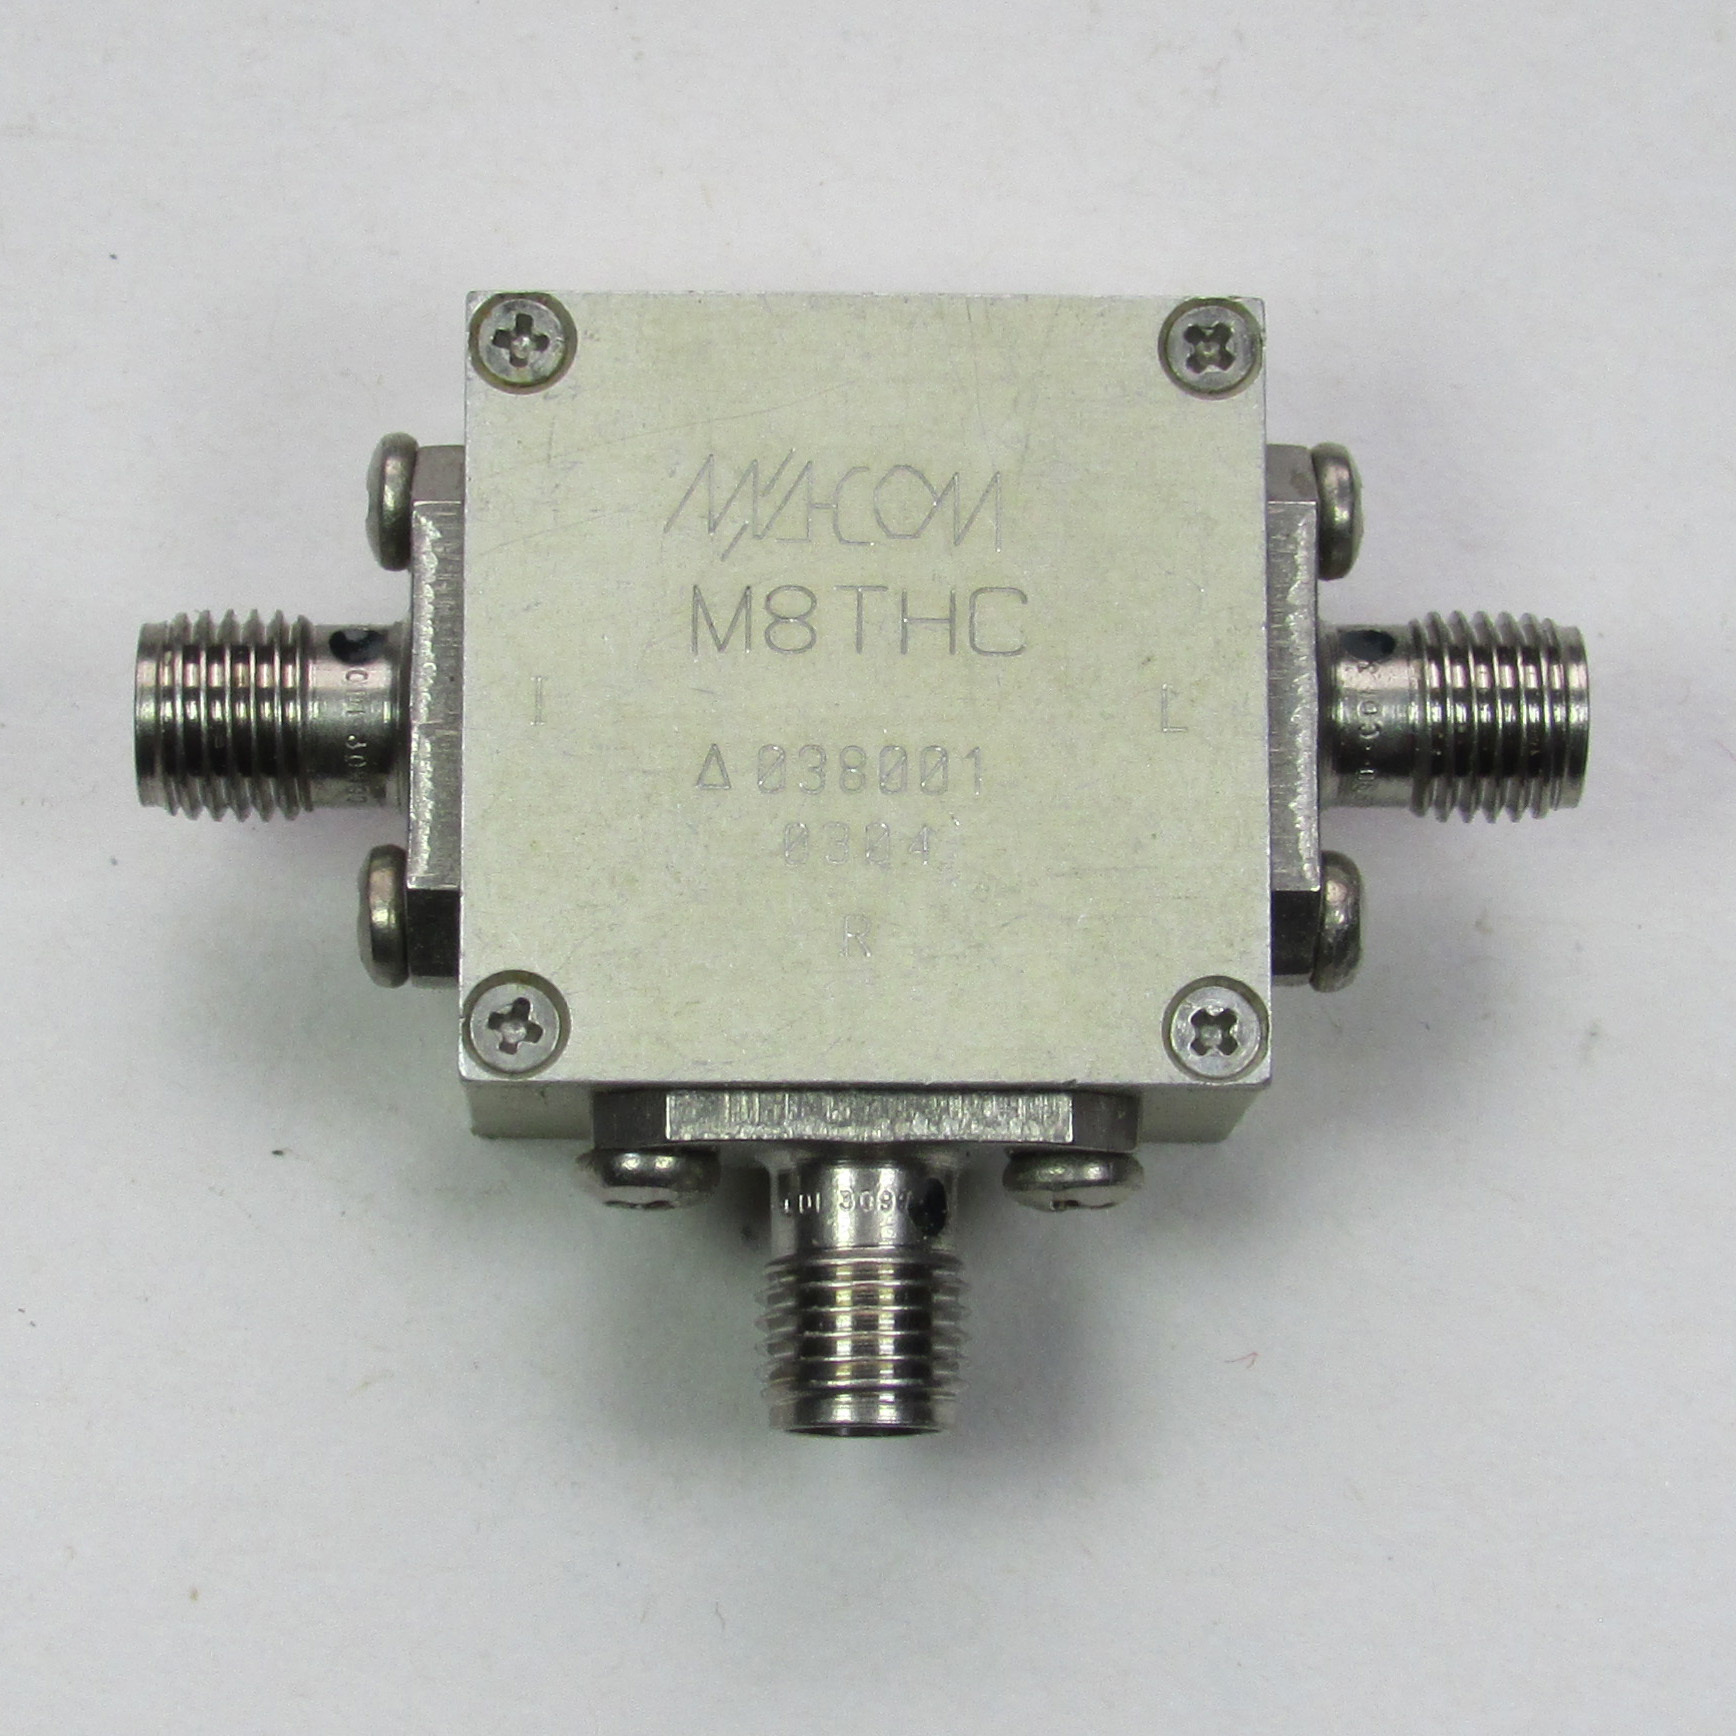 American MACOM M8THC 1-3400MHz SMA RF Triple Balance Mixer